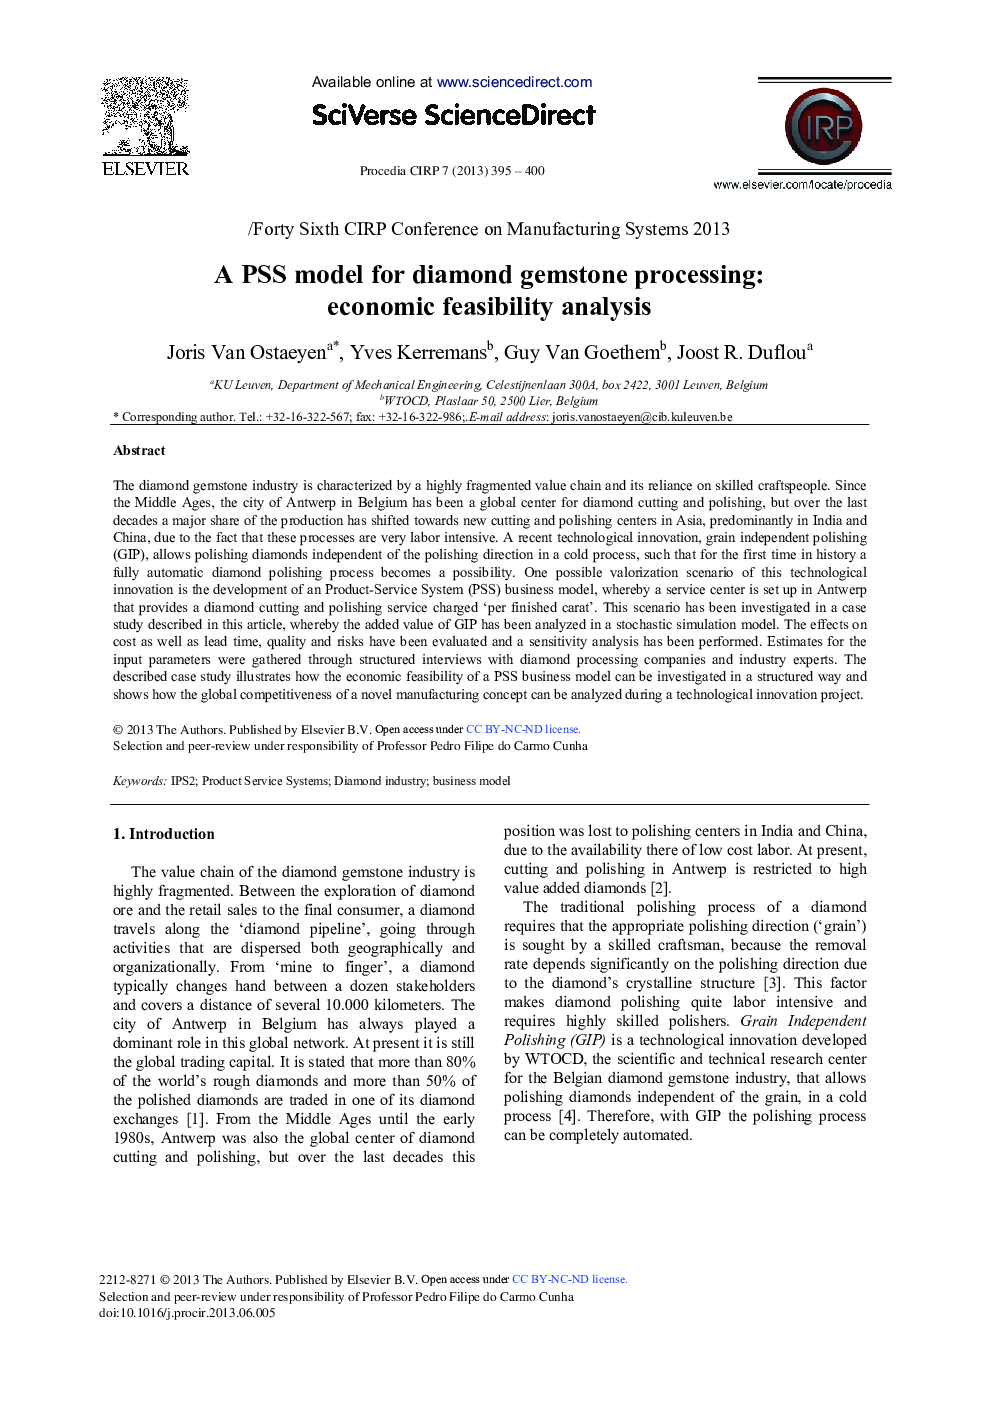 A PSS Model for Diamond Gemstone Processing: Economic Feasibility Analysis 